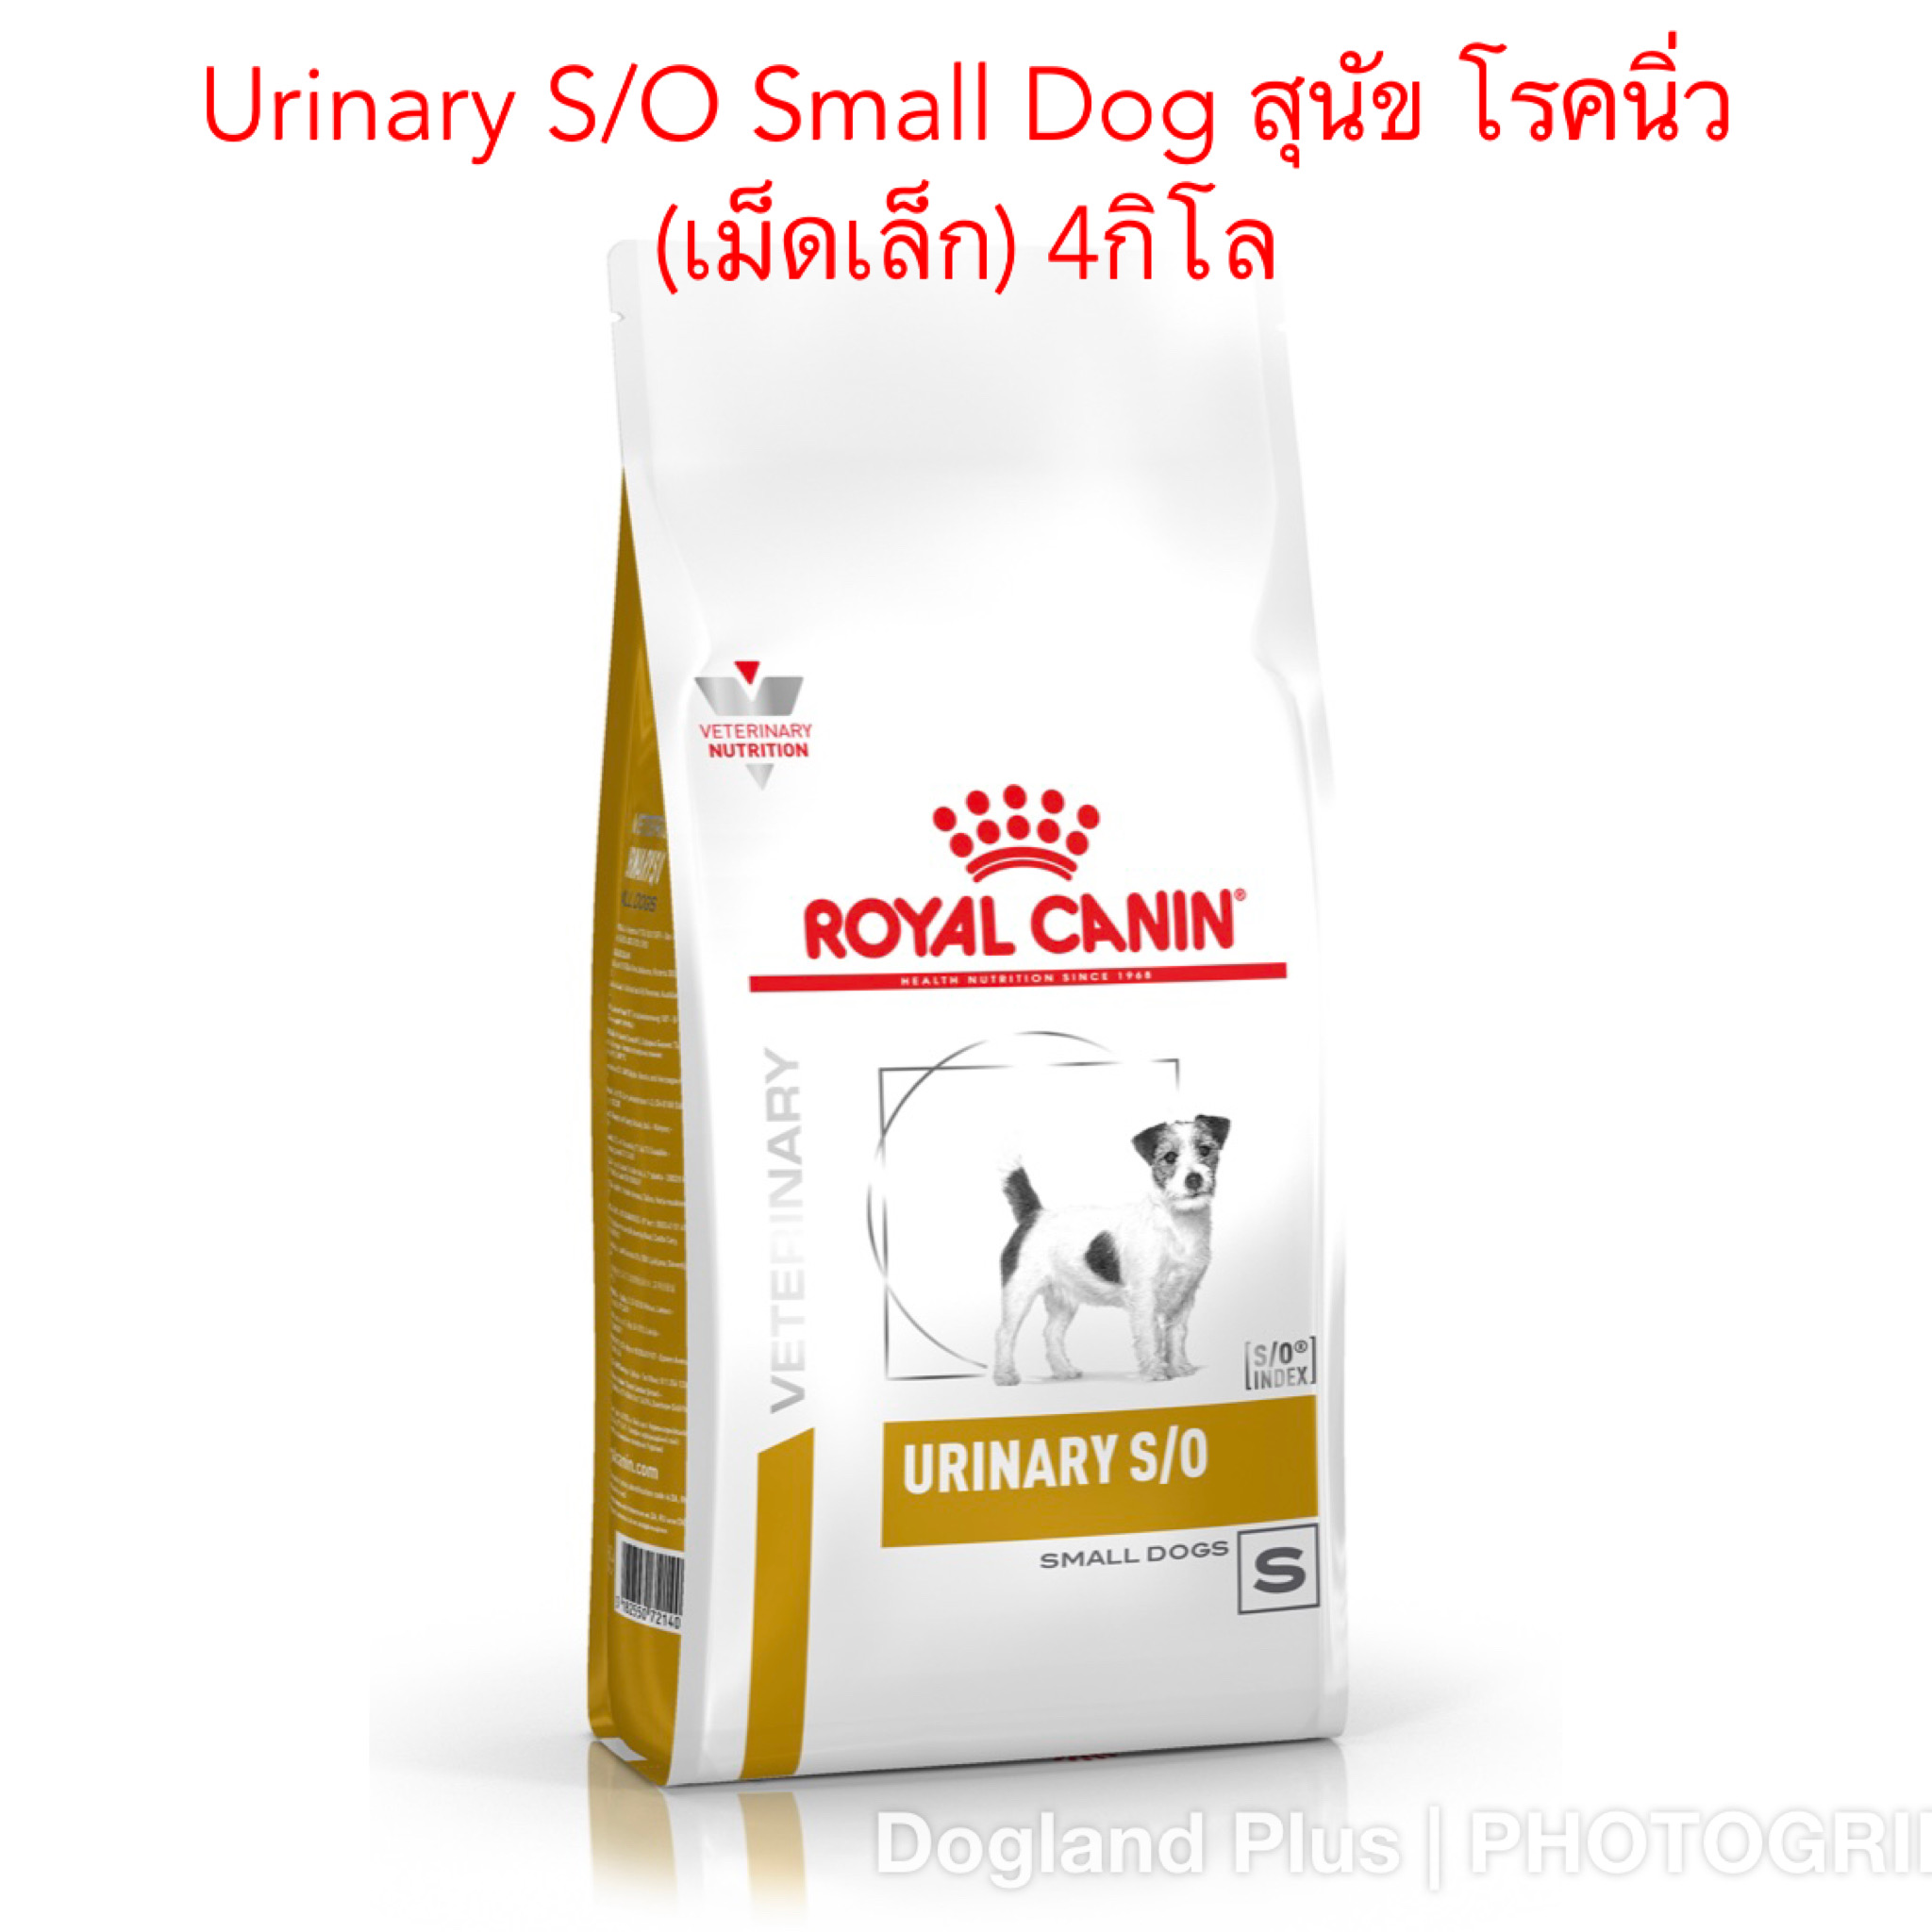 Royal Canin Urinary S/O Small Dog สุนัข โรคนิ่ว เม็ดเล็ก 4 กิโล